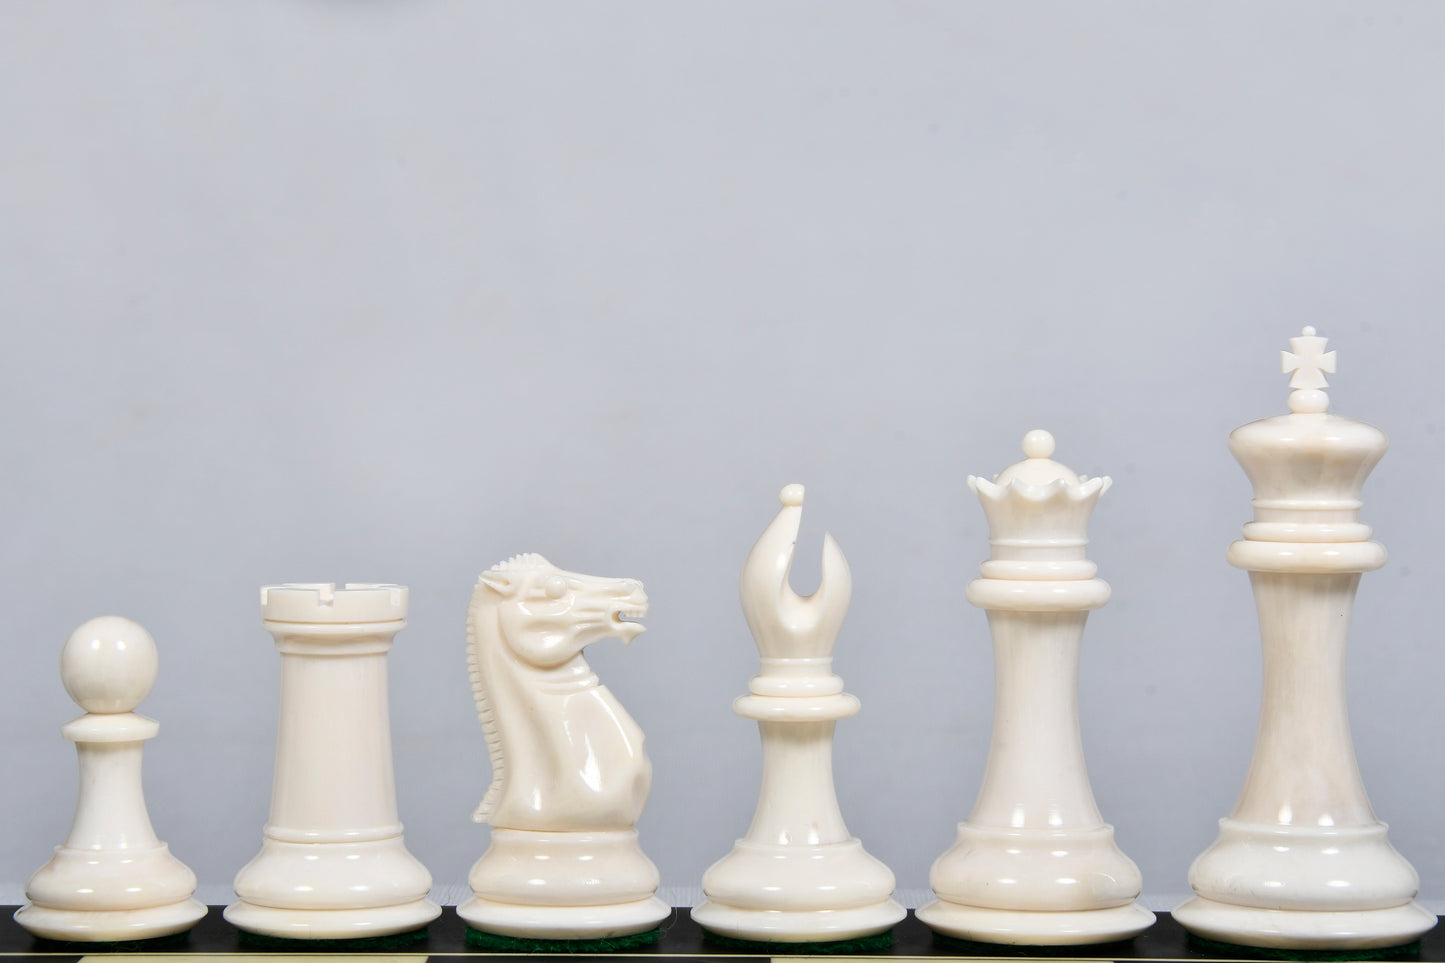 19th Century Staunton Pattern Inspired Camel Bone Chess Set in Black Dyed & Bleached White - 3.6" King